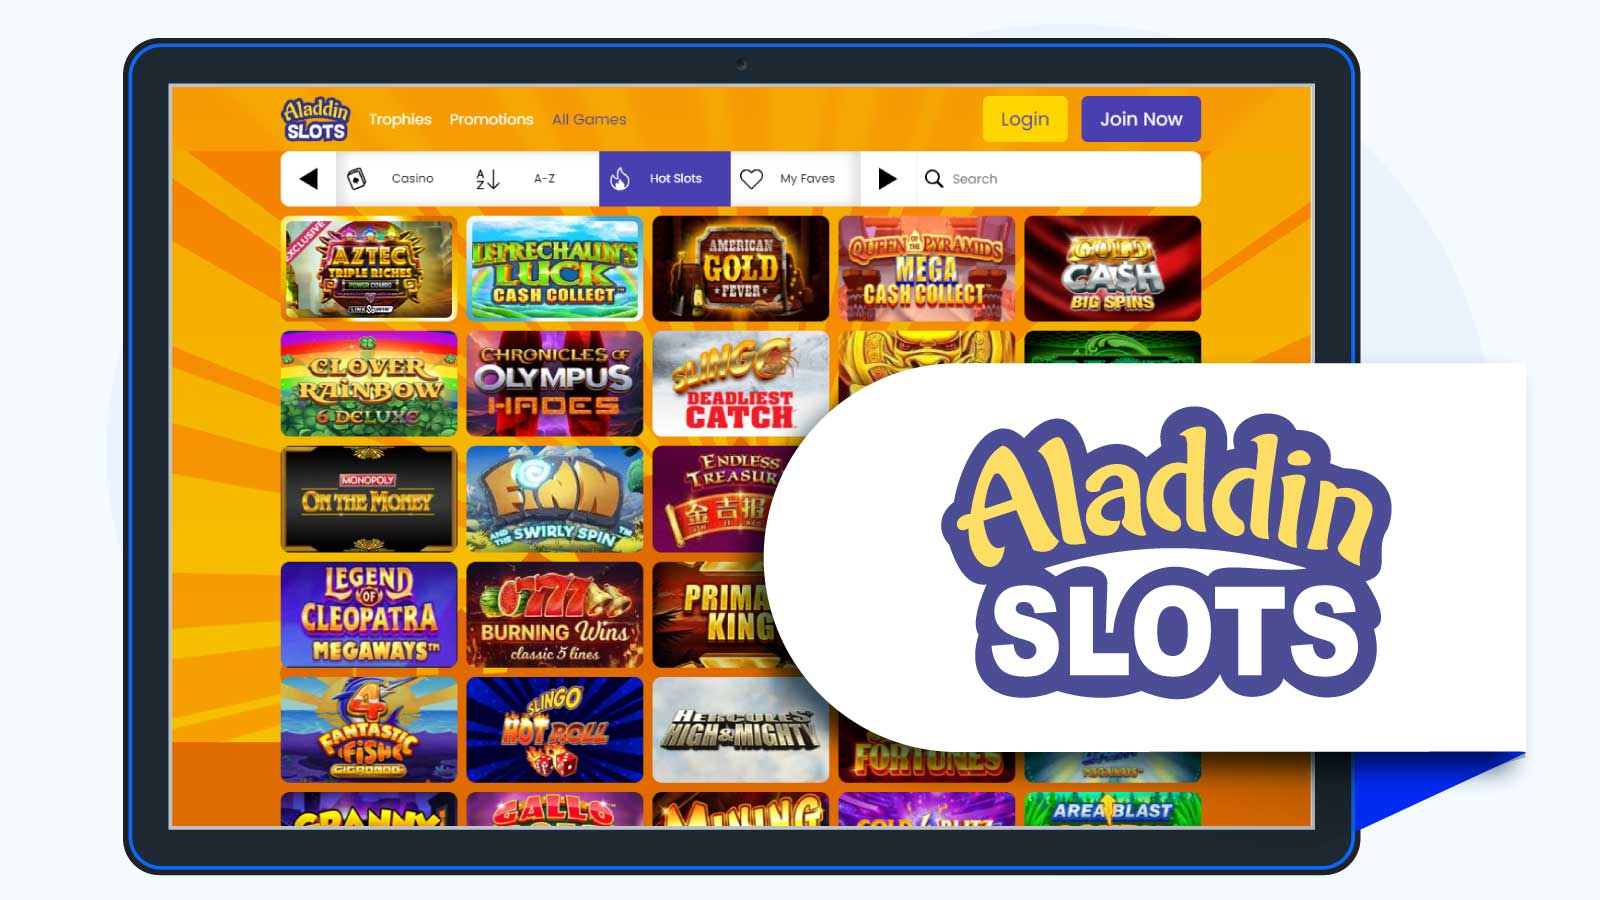 Aladdin Slots Playtech No Deposit Bonus Casino for UK Players